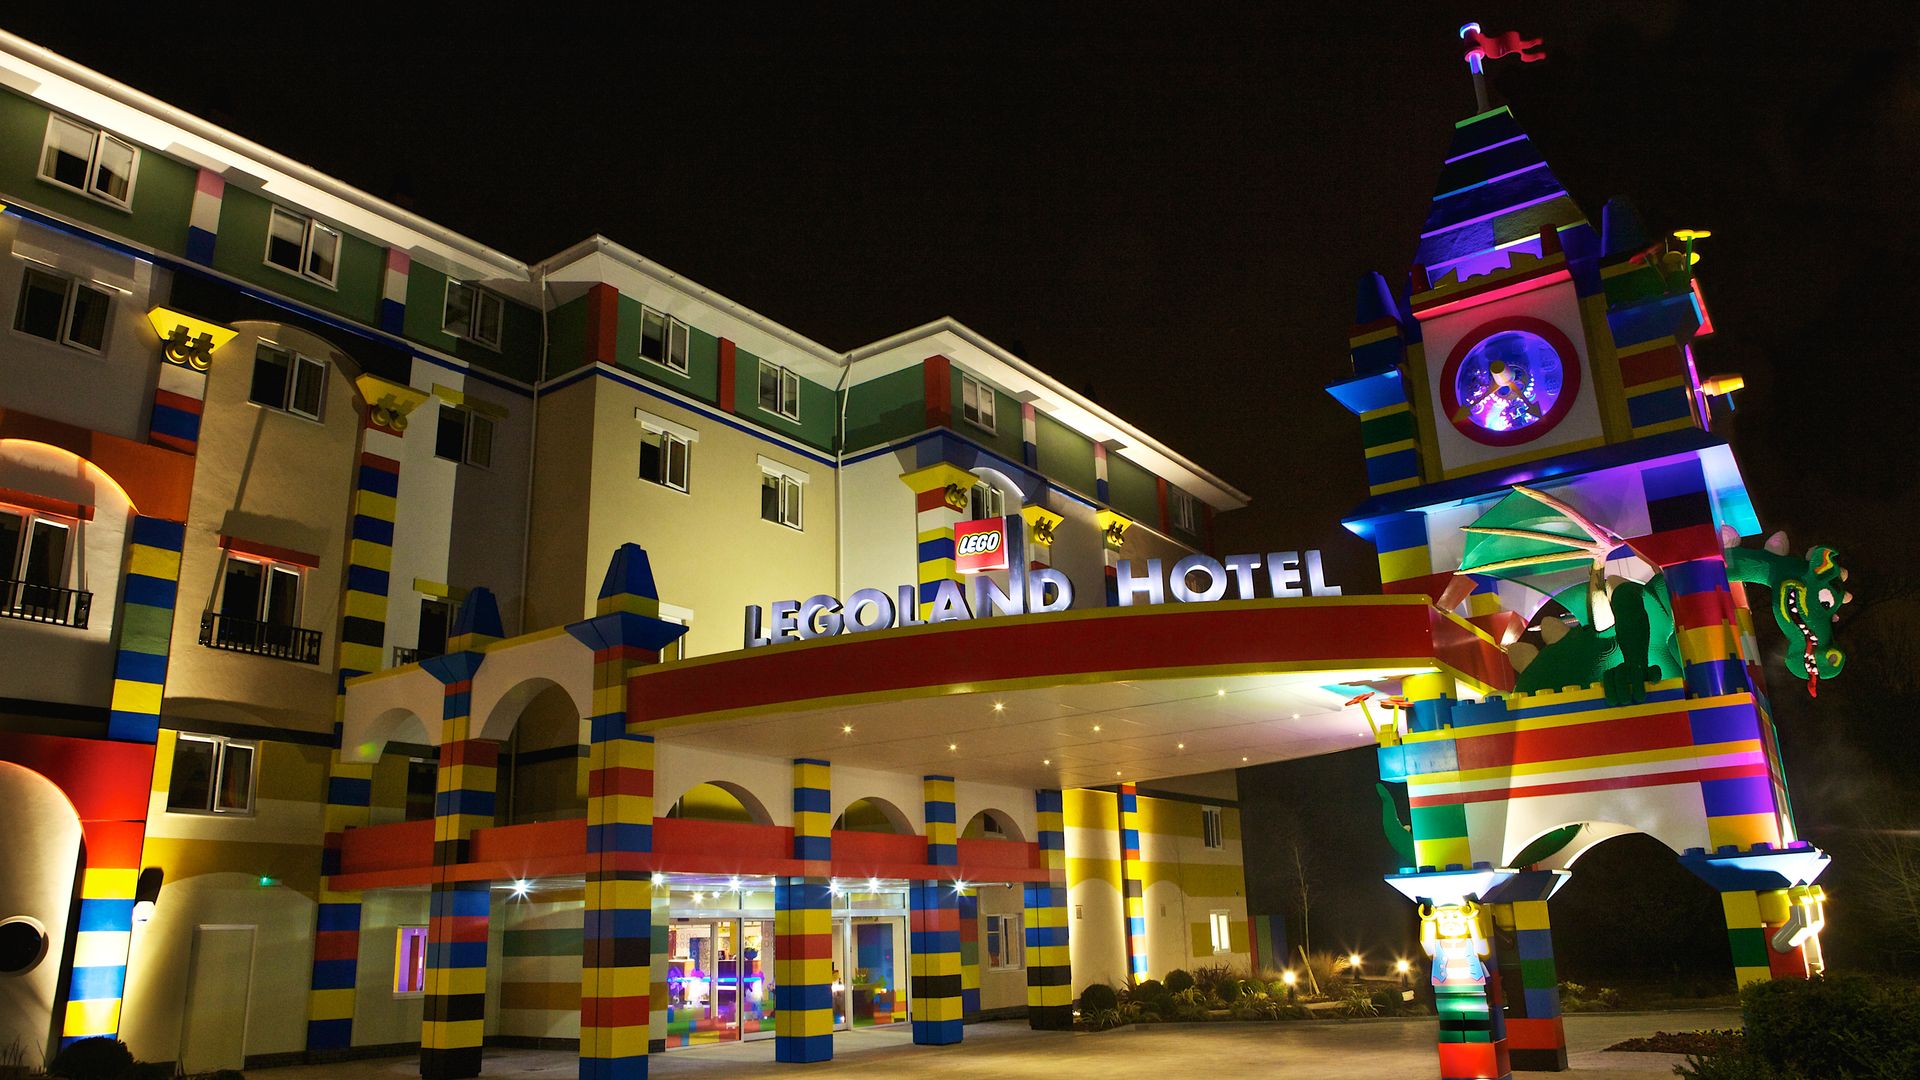 Legoland hotel at night